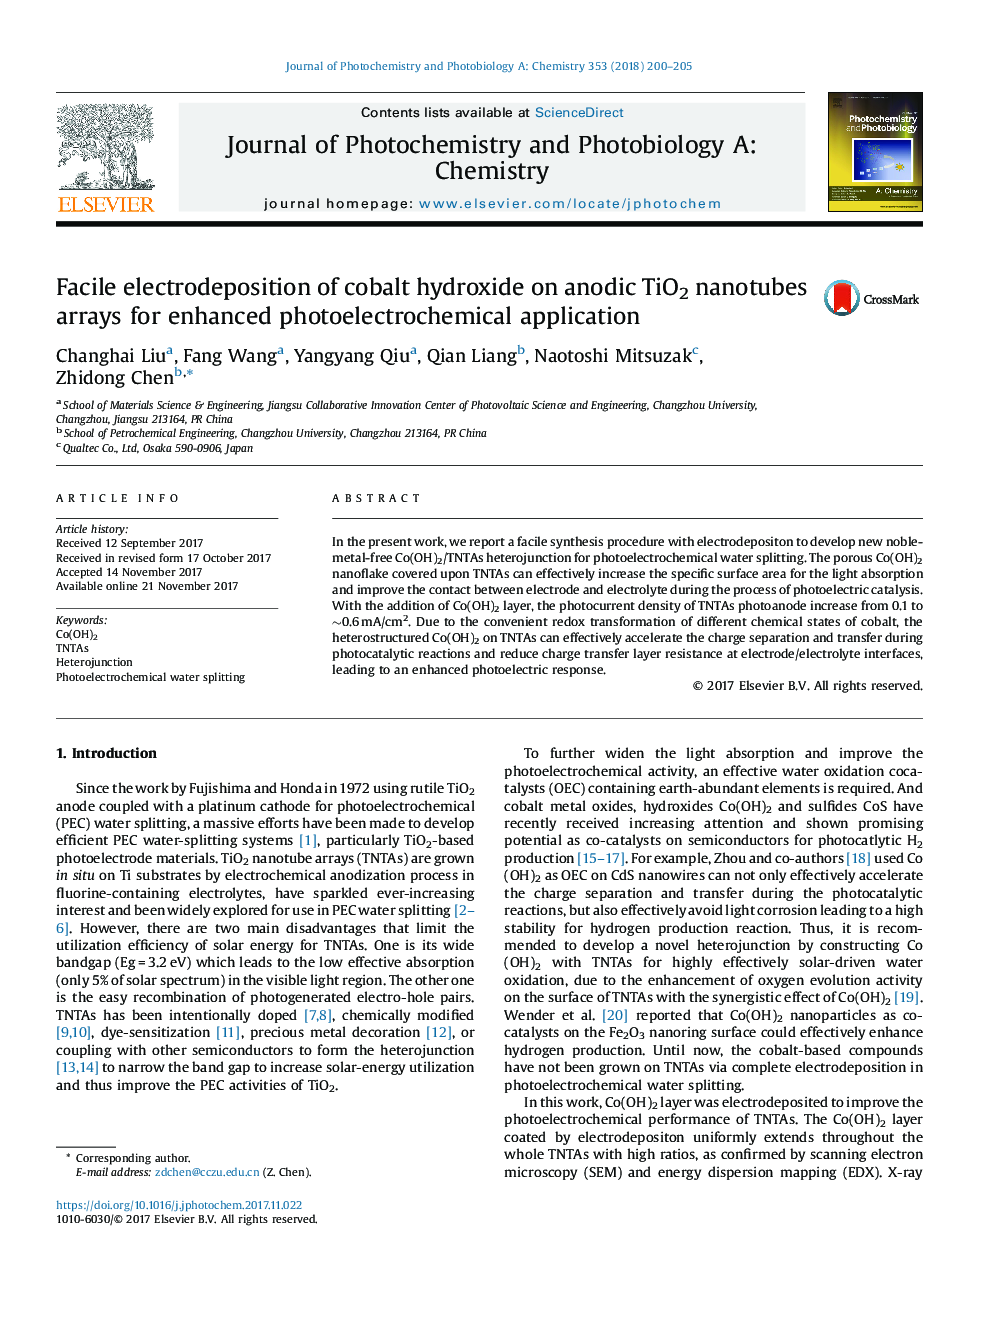 Facile electrodeposition of cobalt hydroxide on anodic TiO2 nanotubes arrays for enhanced photoelectrochemical application